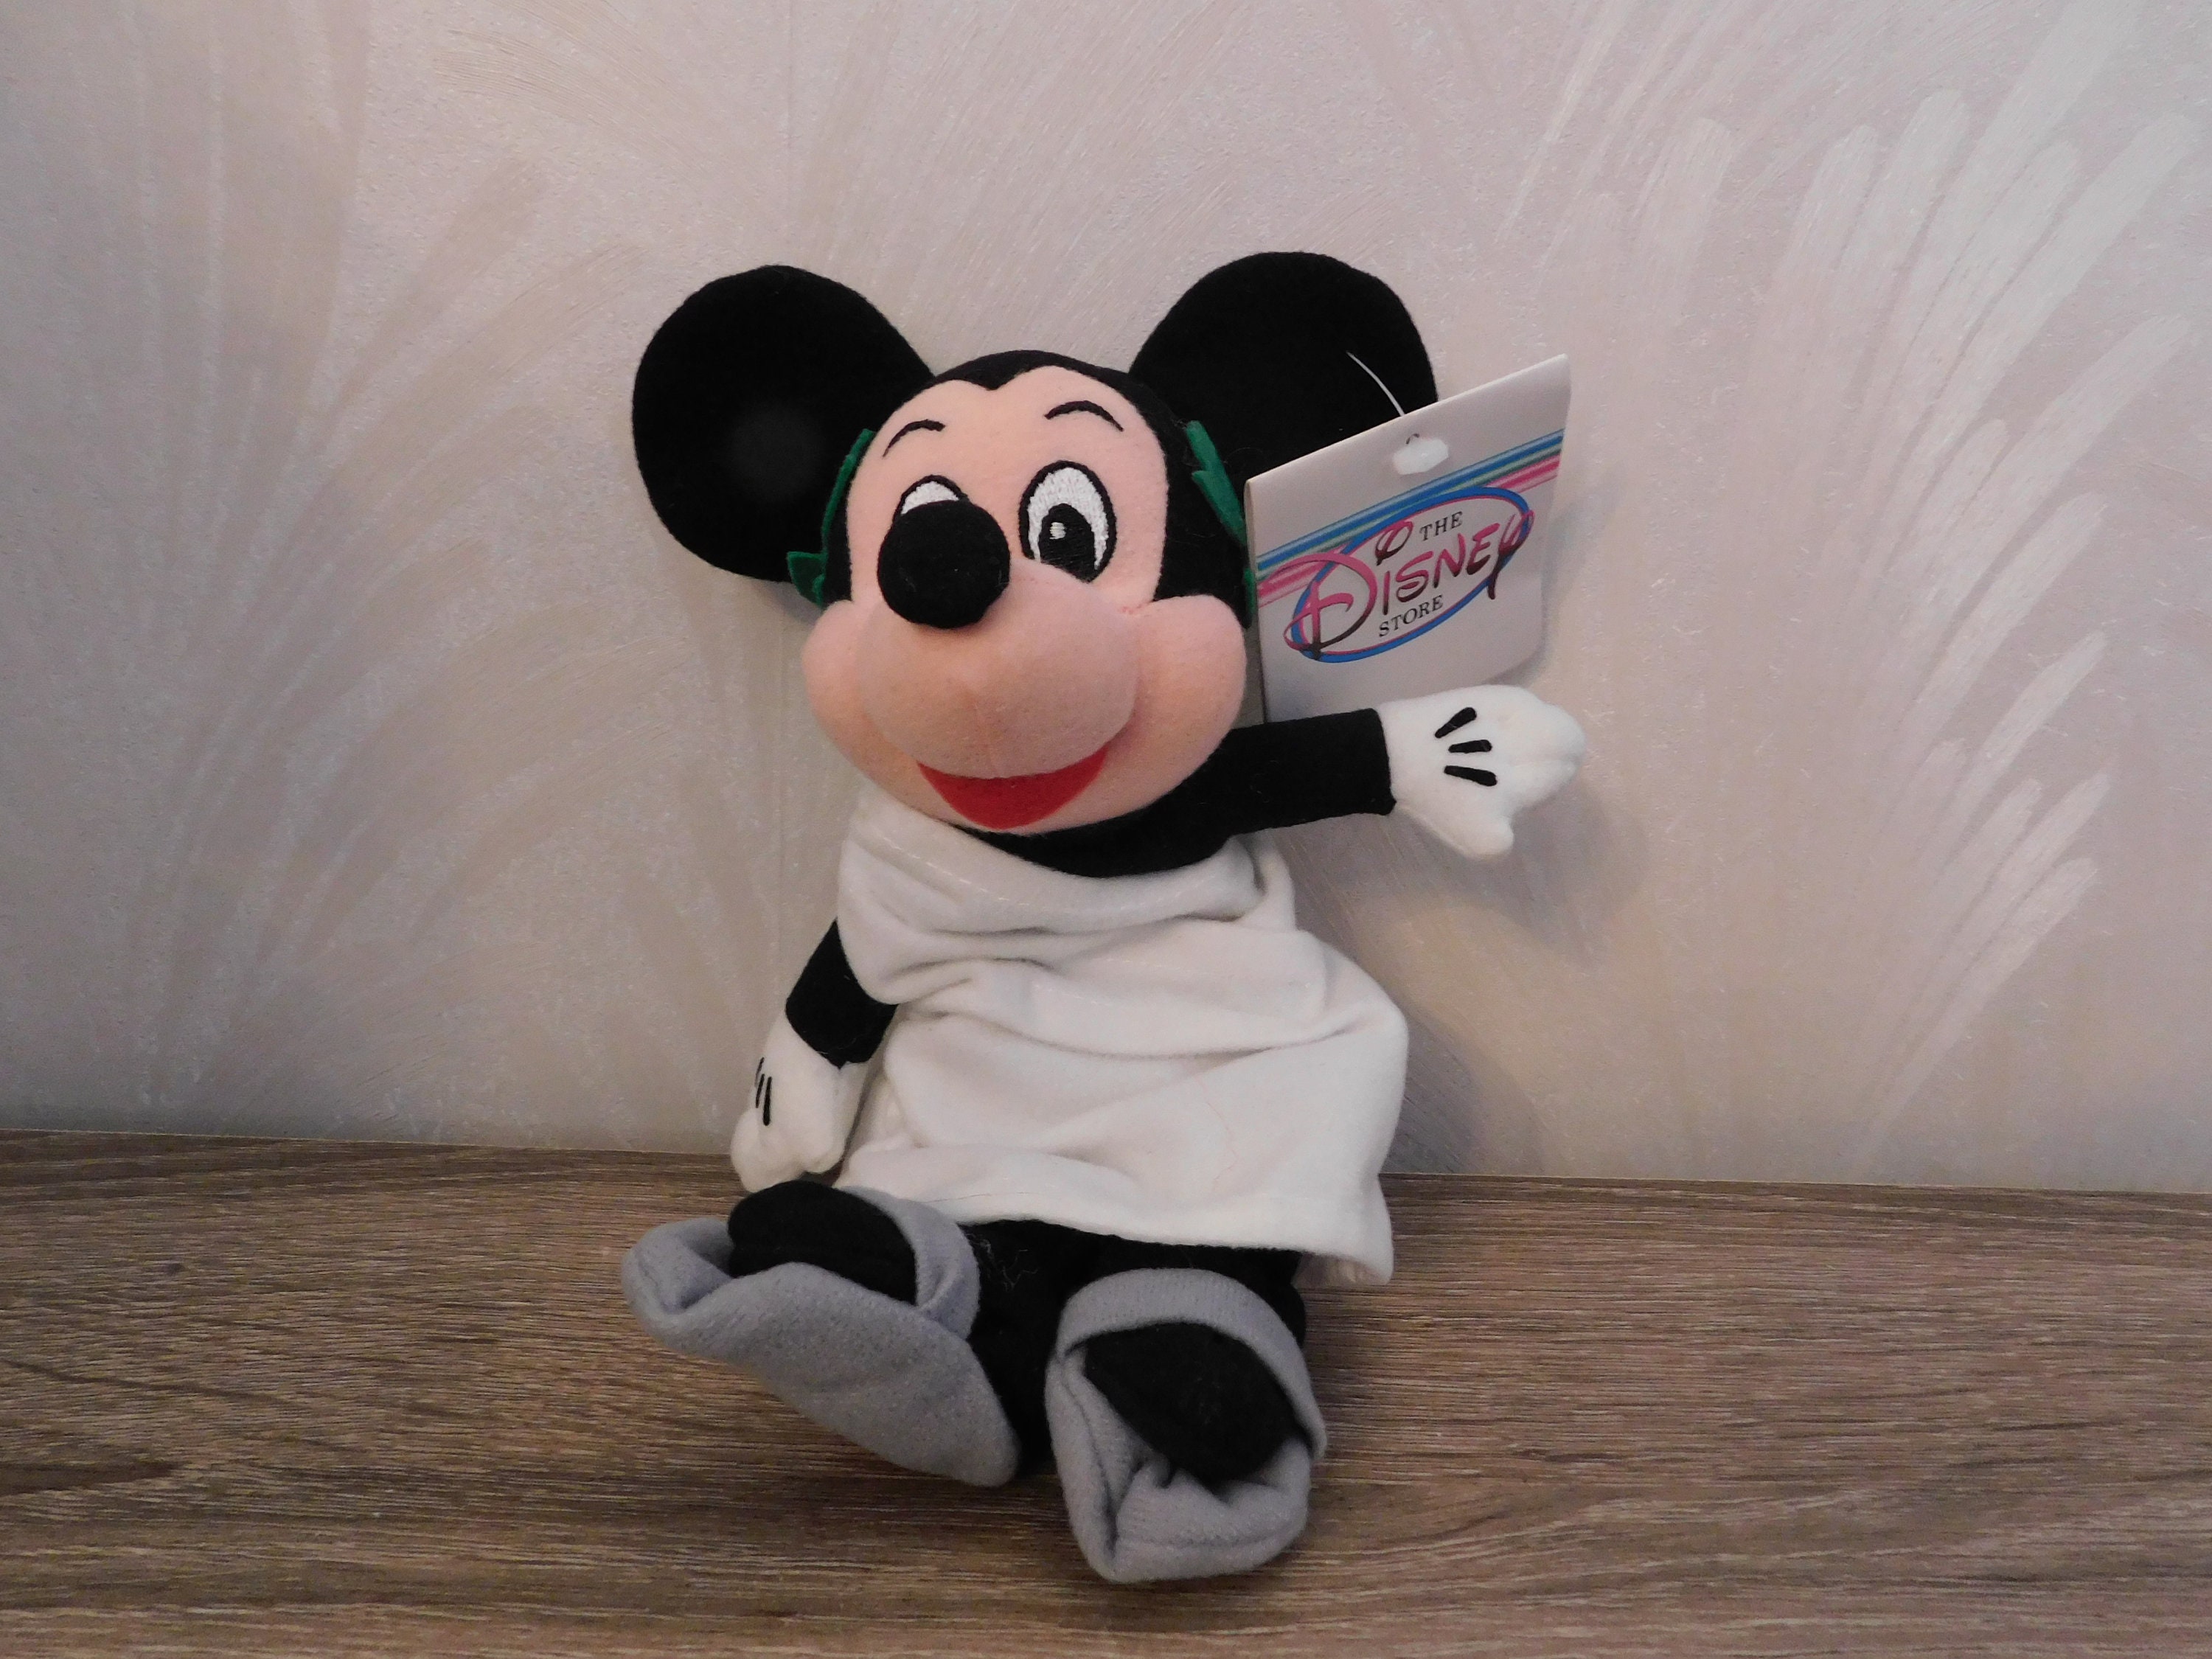 Japan Disney Metacil Light Knock Pencil - Mickey & Minnie